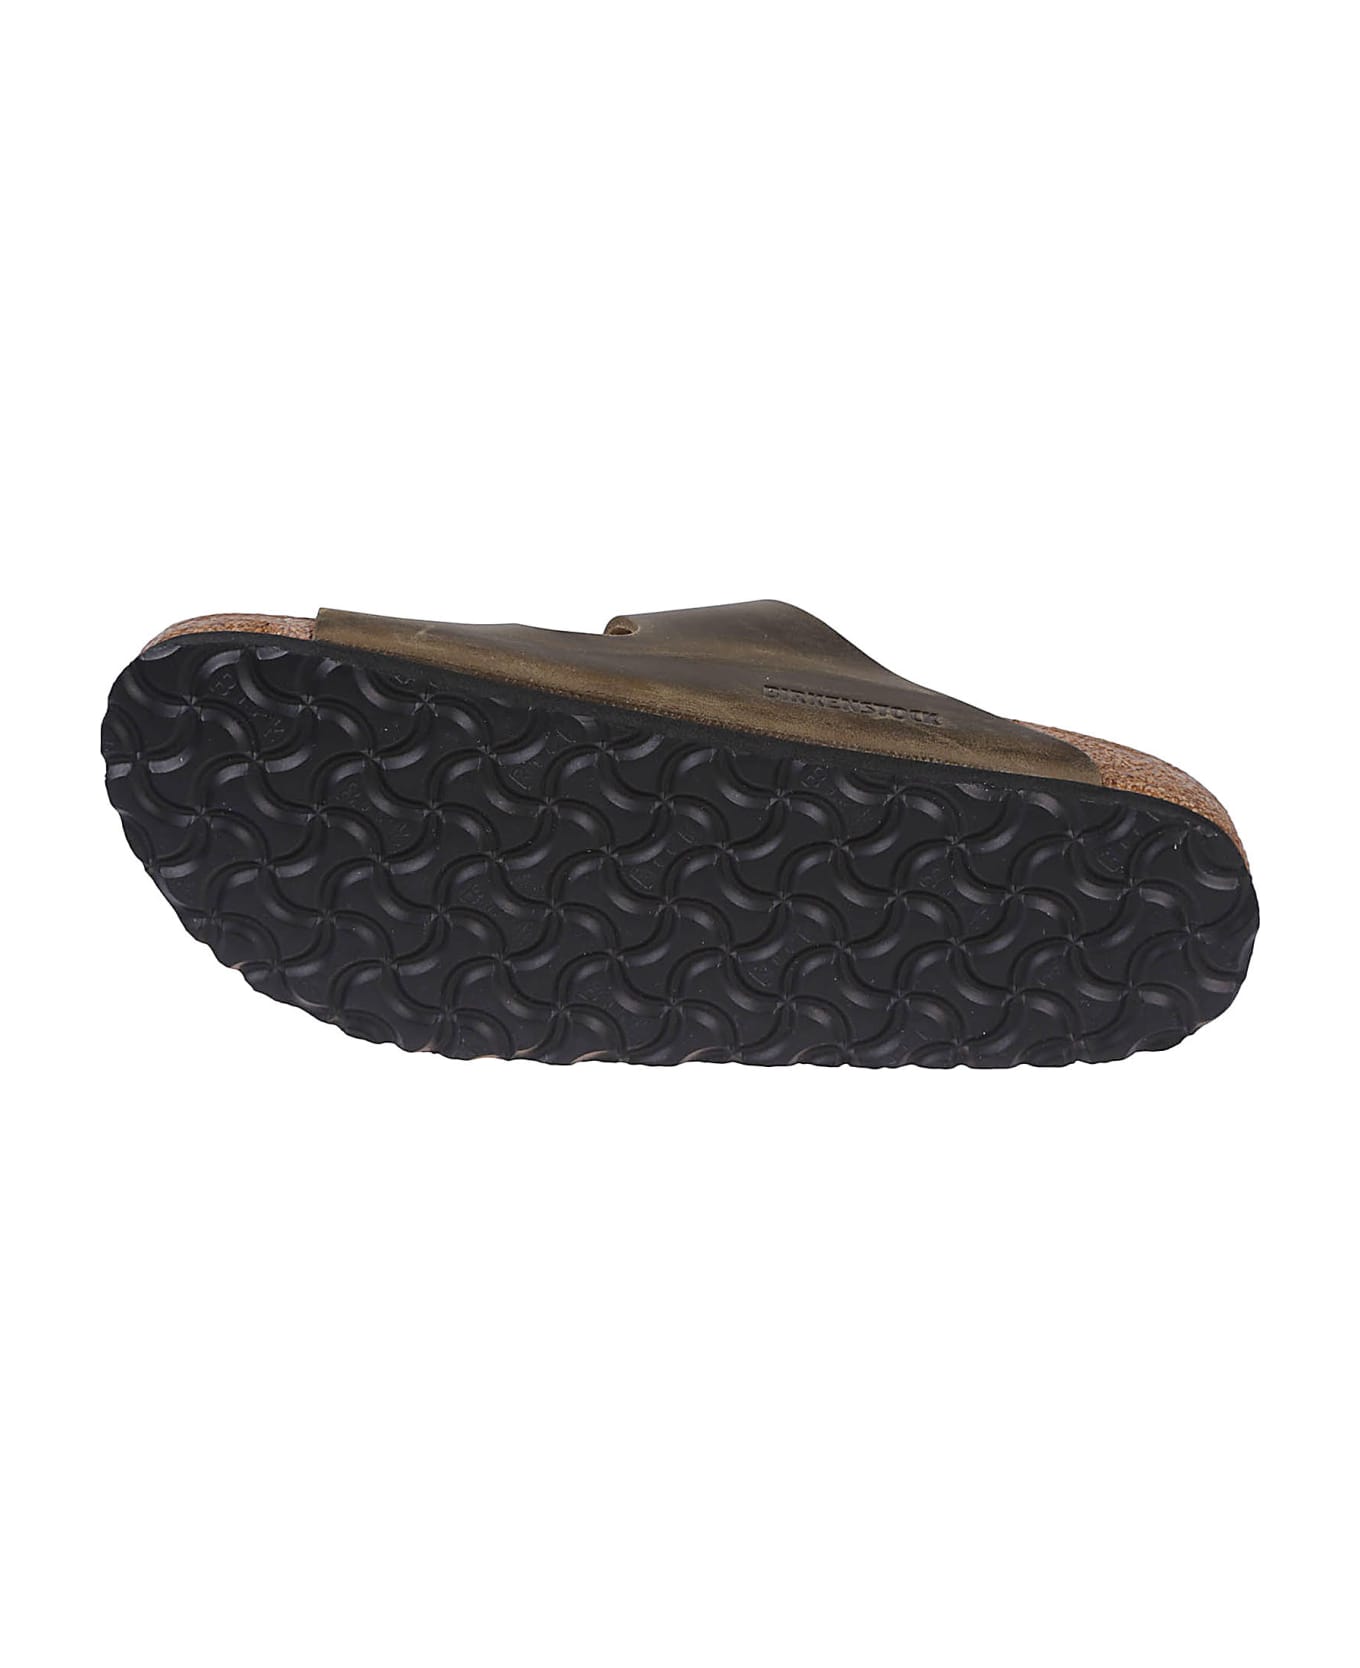 Birkenstock Arizona Sandals - Faded Khaki